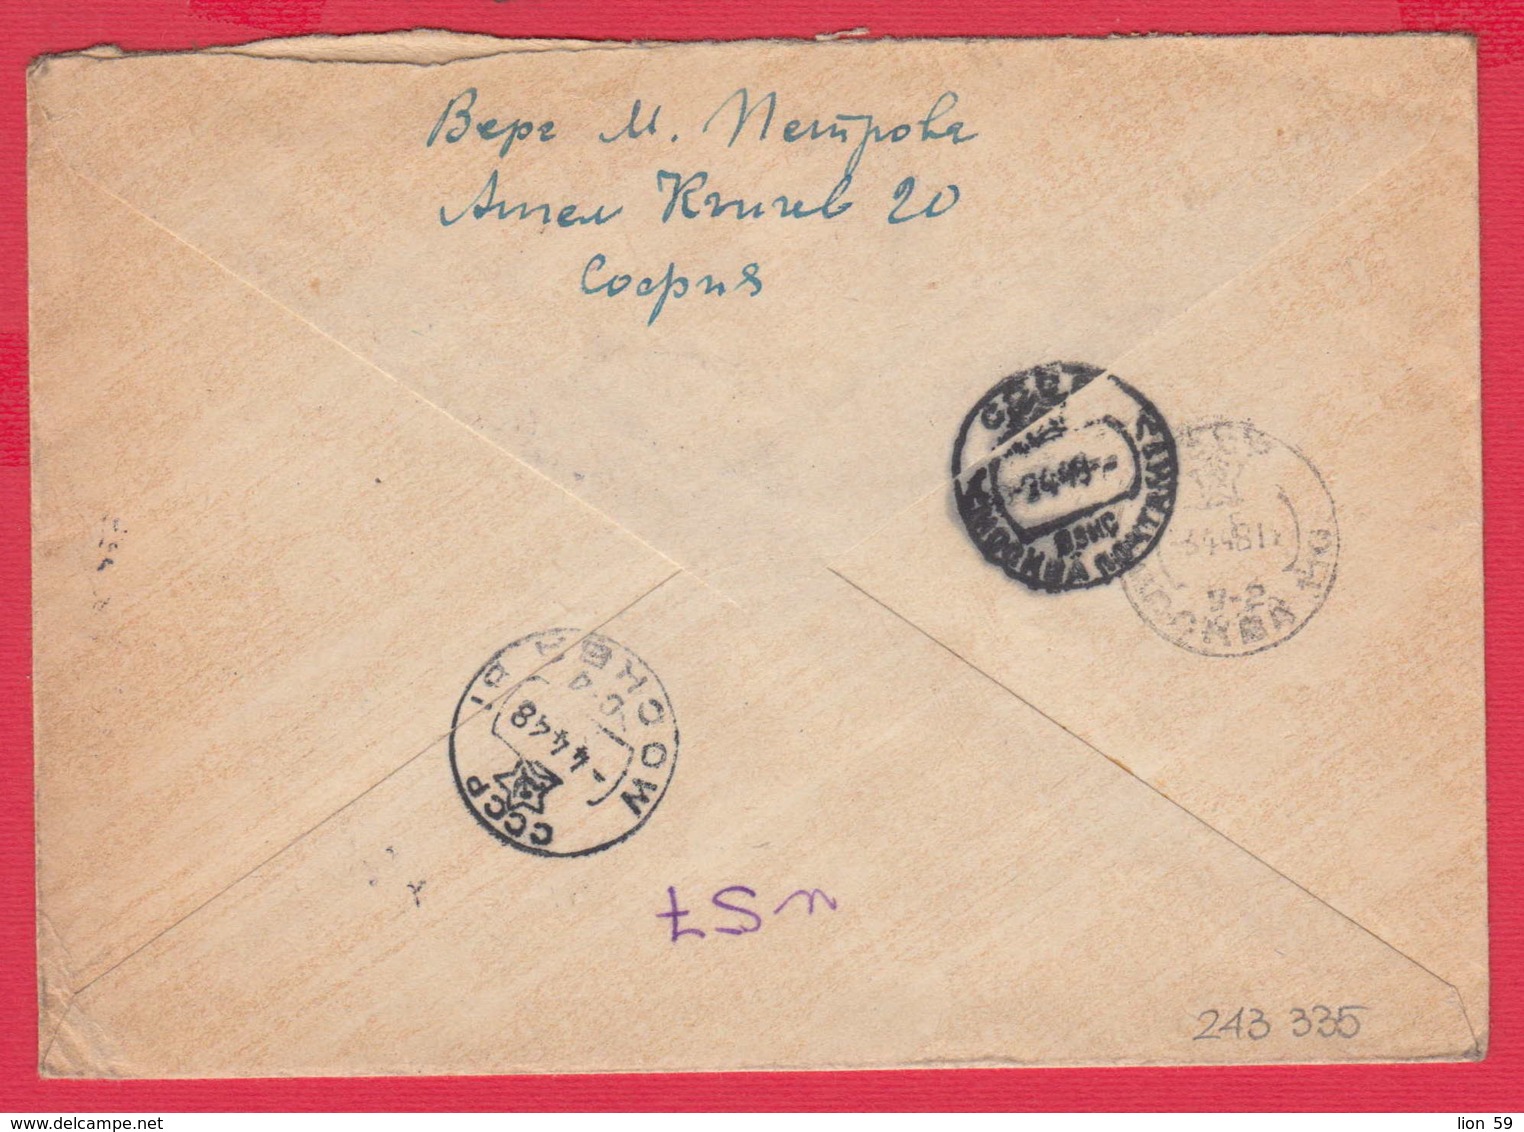 243335 / 1948 - 60.00 Lv. Anti-fascism STATUE , REGISTERED POSTE AERIENNE SOFIA - MOSCOW RUSSIA , Bulgaria - Briefe U. Dokumente